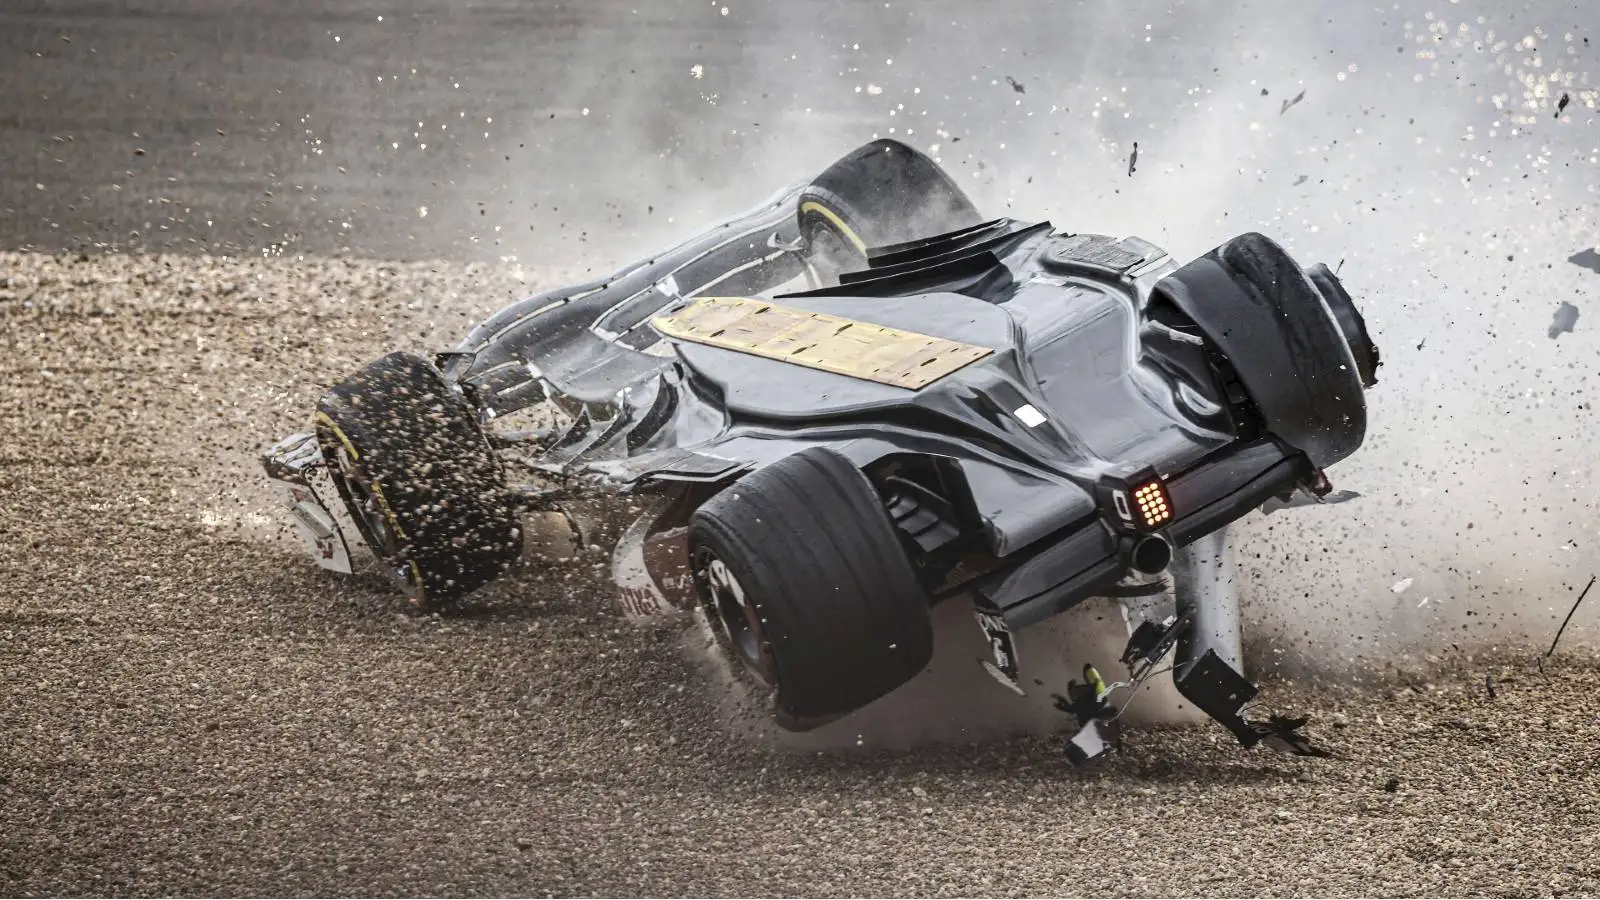 Zhou Guanyu's Alfa Romeo upside down in the gravel. Silverstone July 2022.